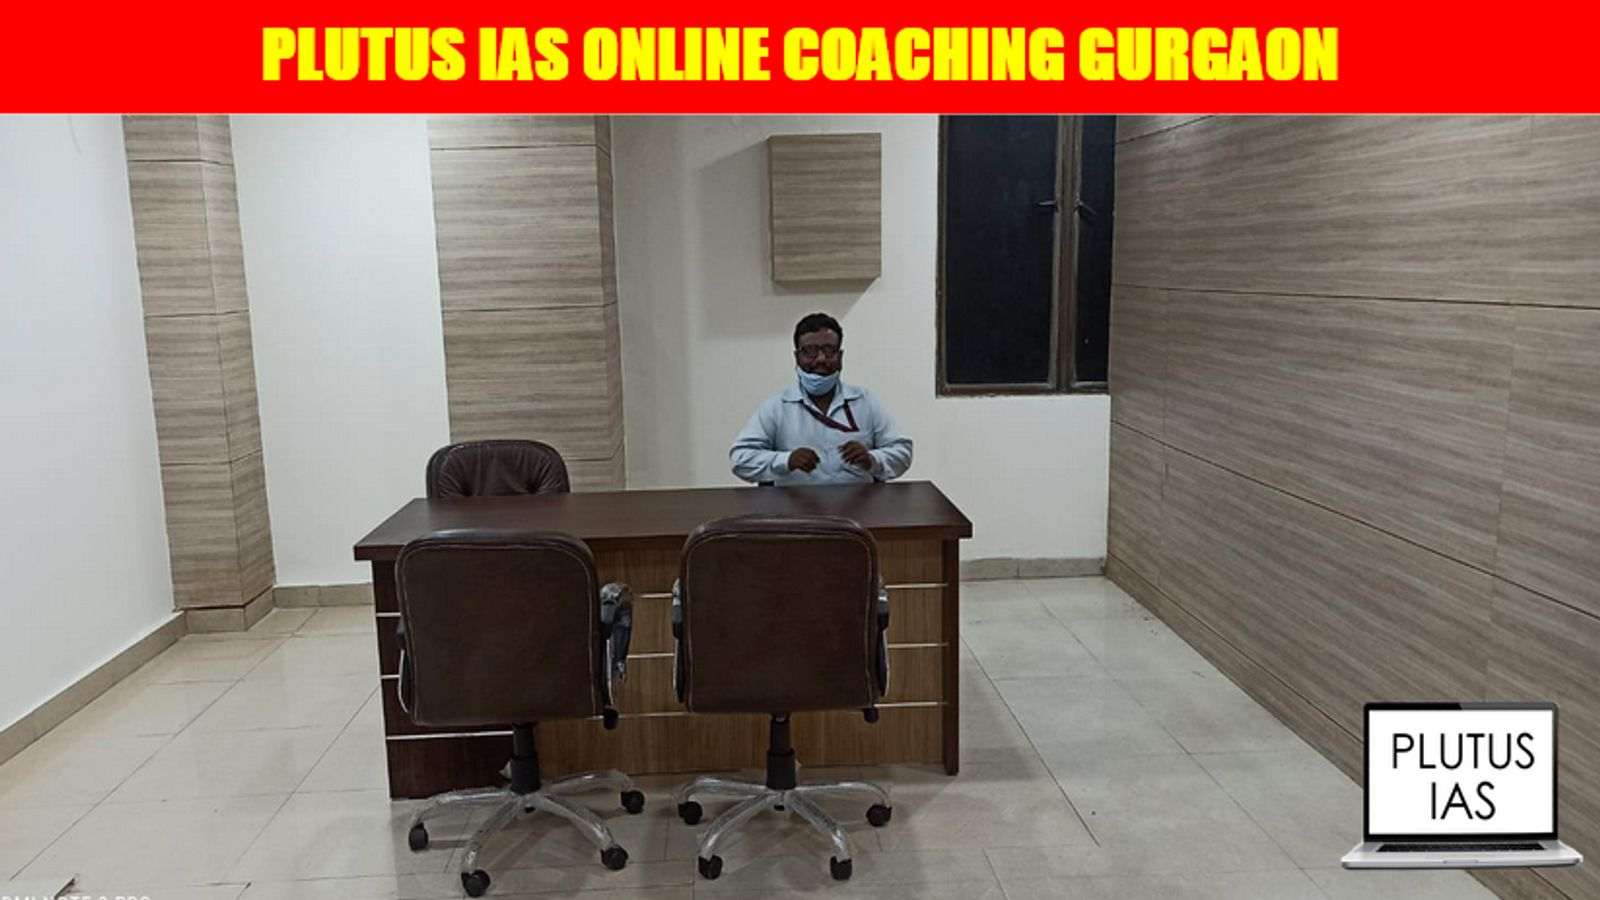 Plutus IAS Online Coaching Gurgaon